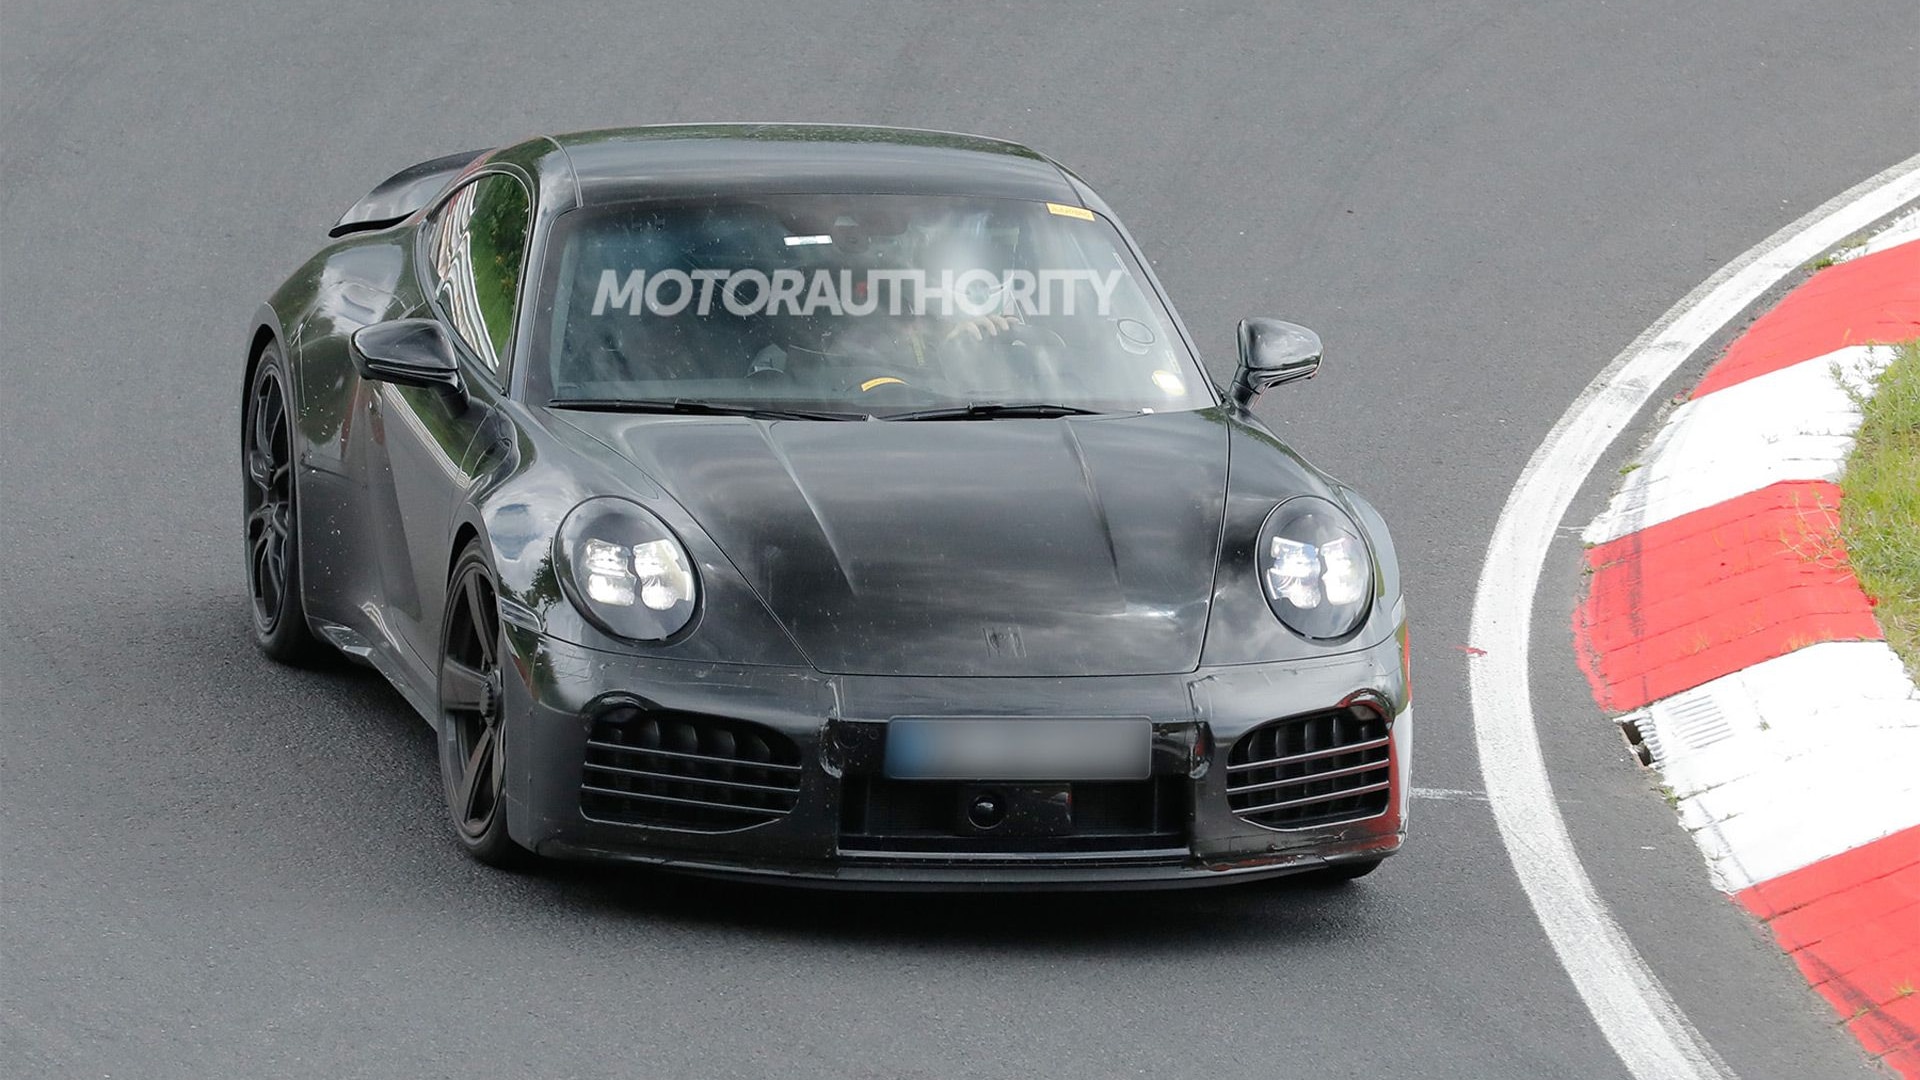 2026 Porsche 911 Turbo S Touring spy shots - Photo credit: Baldauf